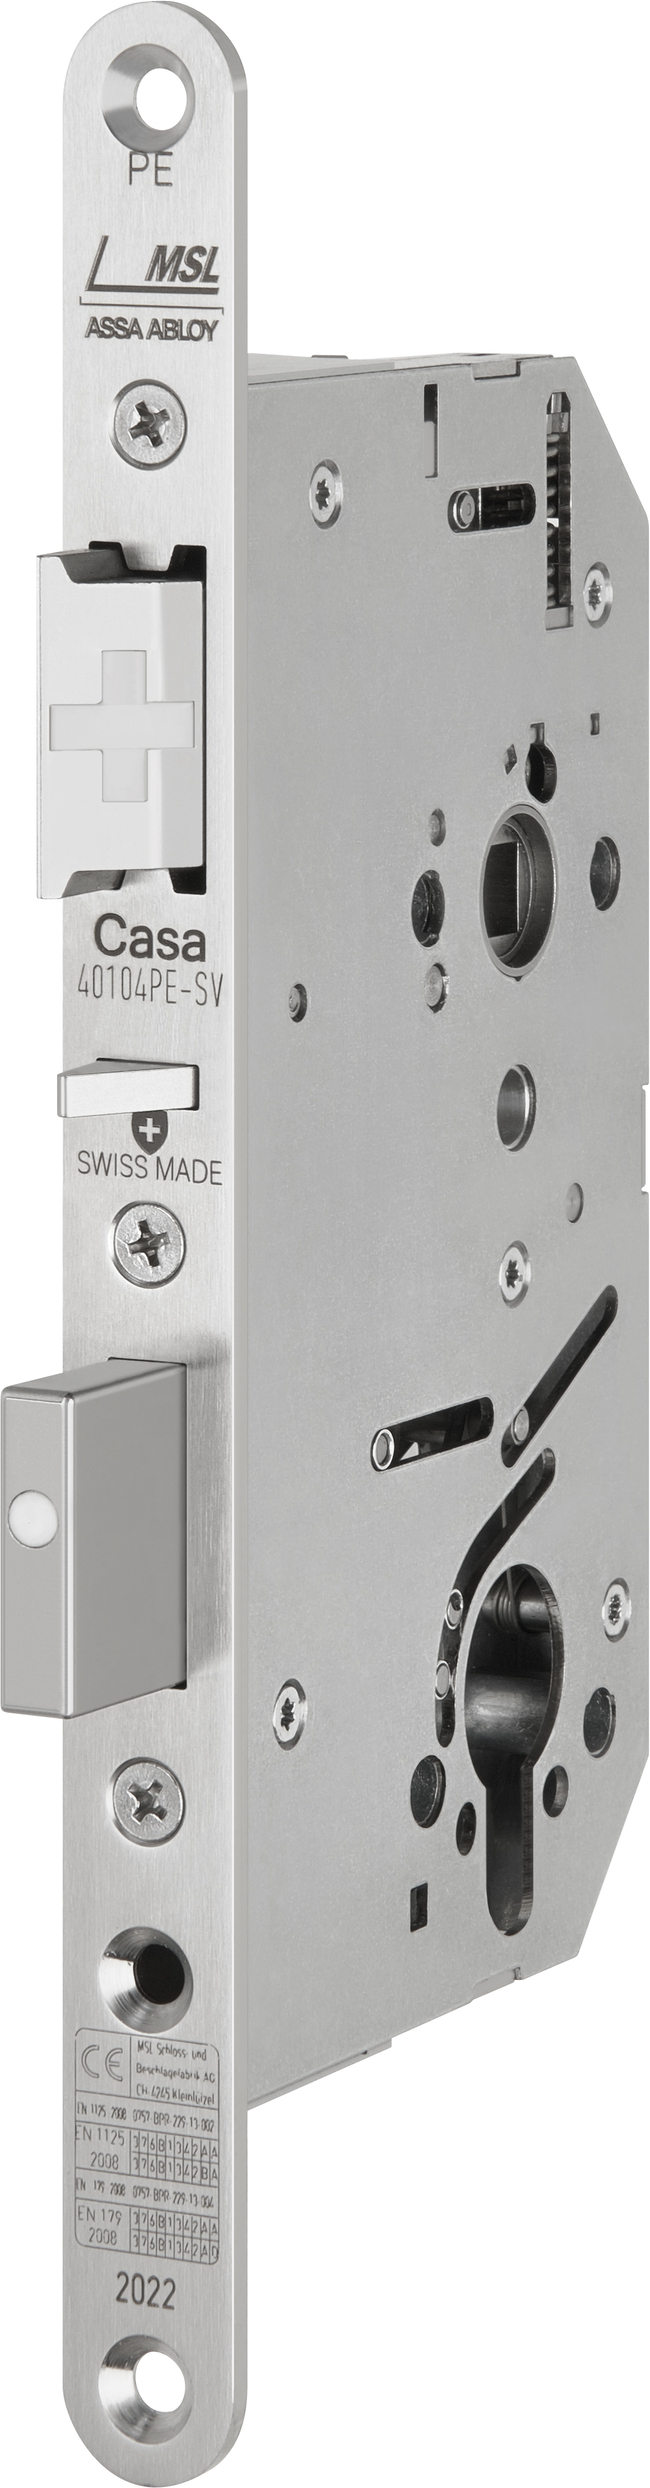 Panic safety single-point locking (solid leaf doors) 40104PE-SV